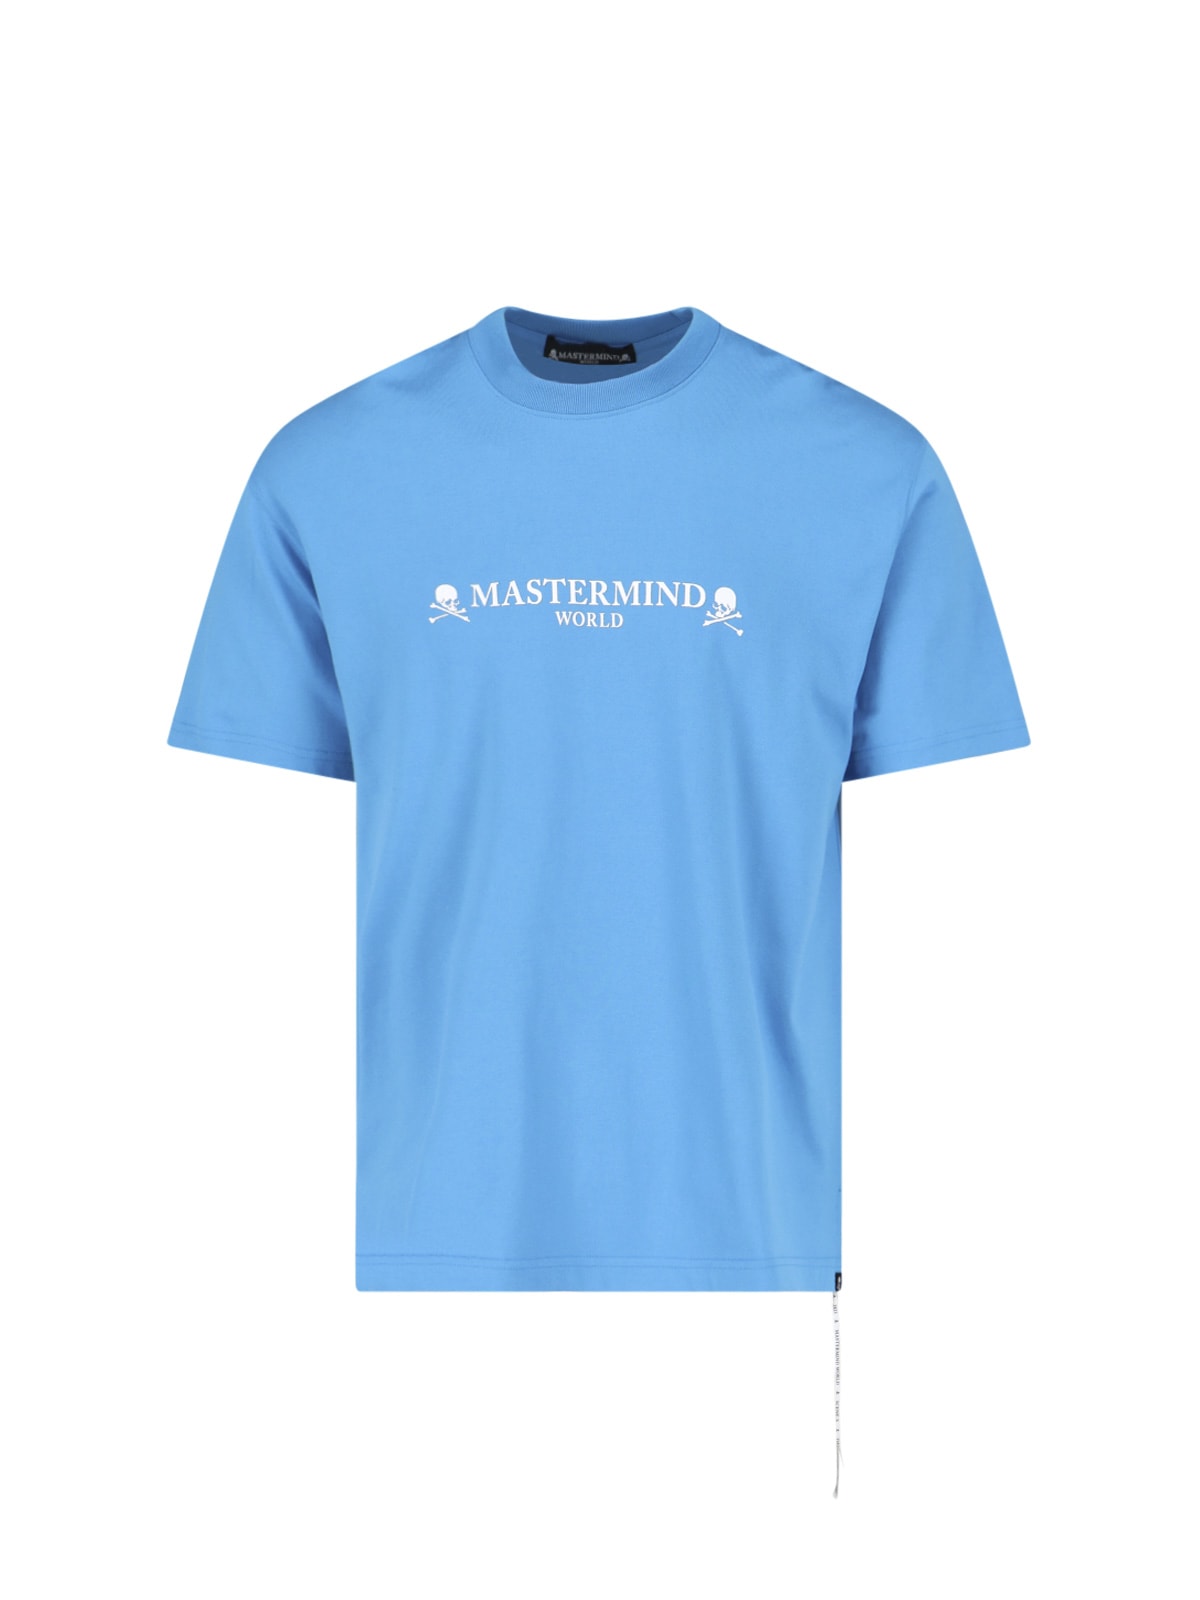 MASTERMIND WORLD T-Shirt